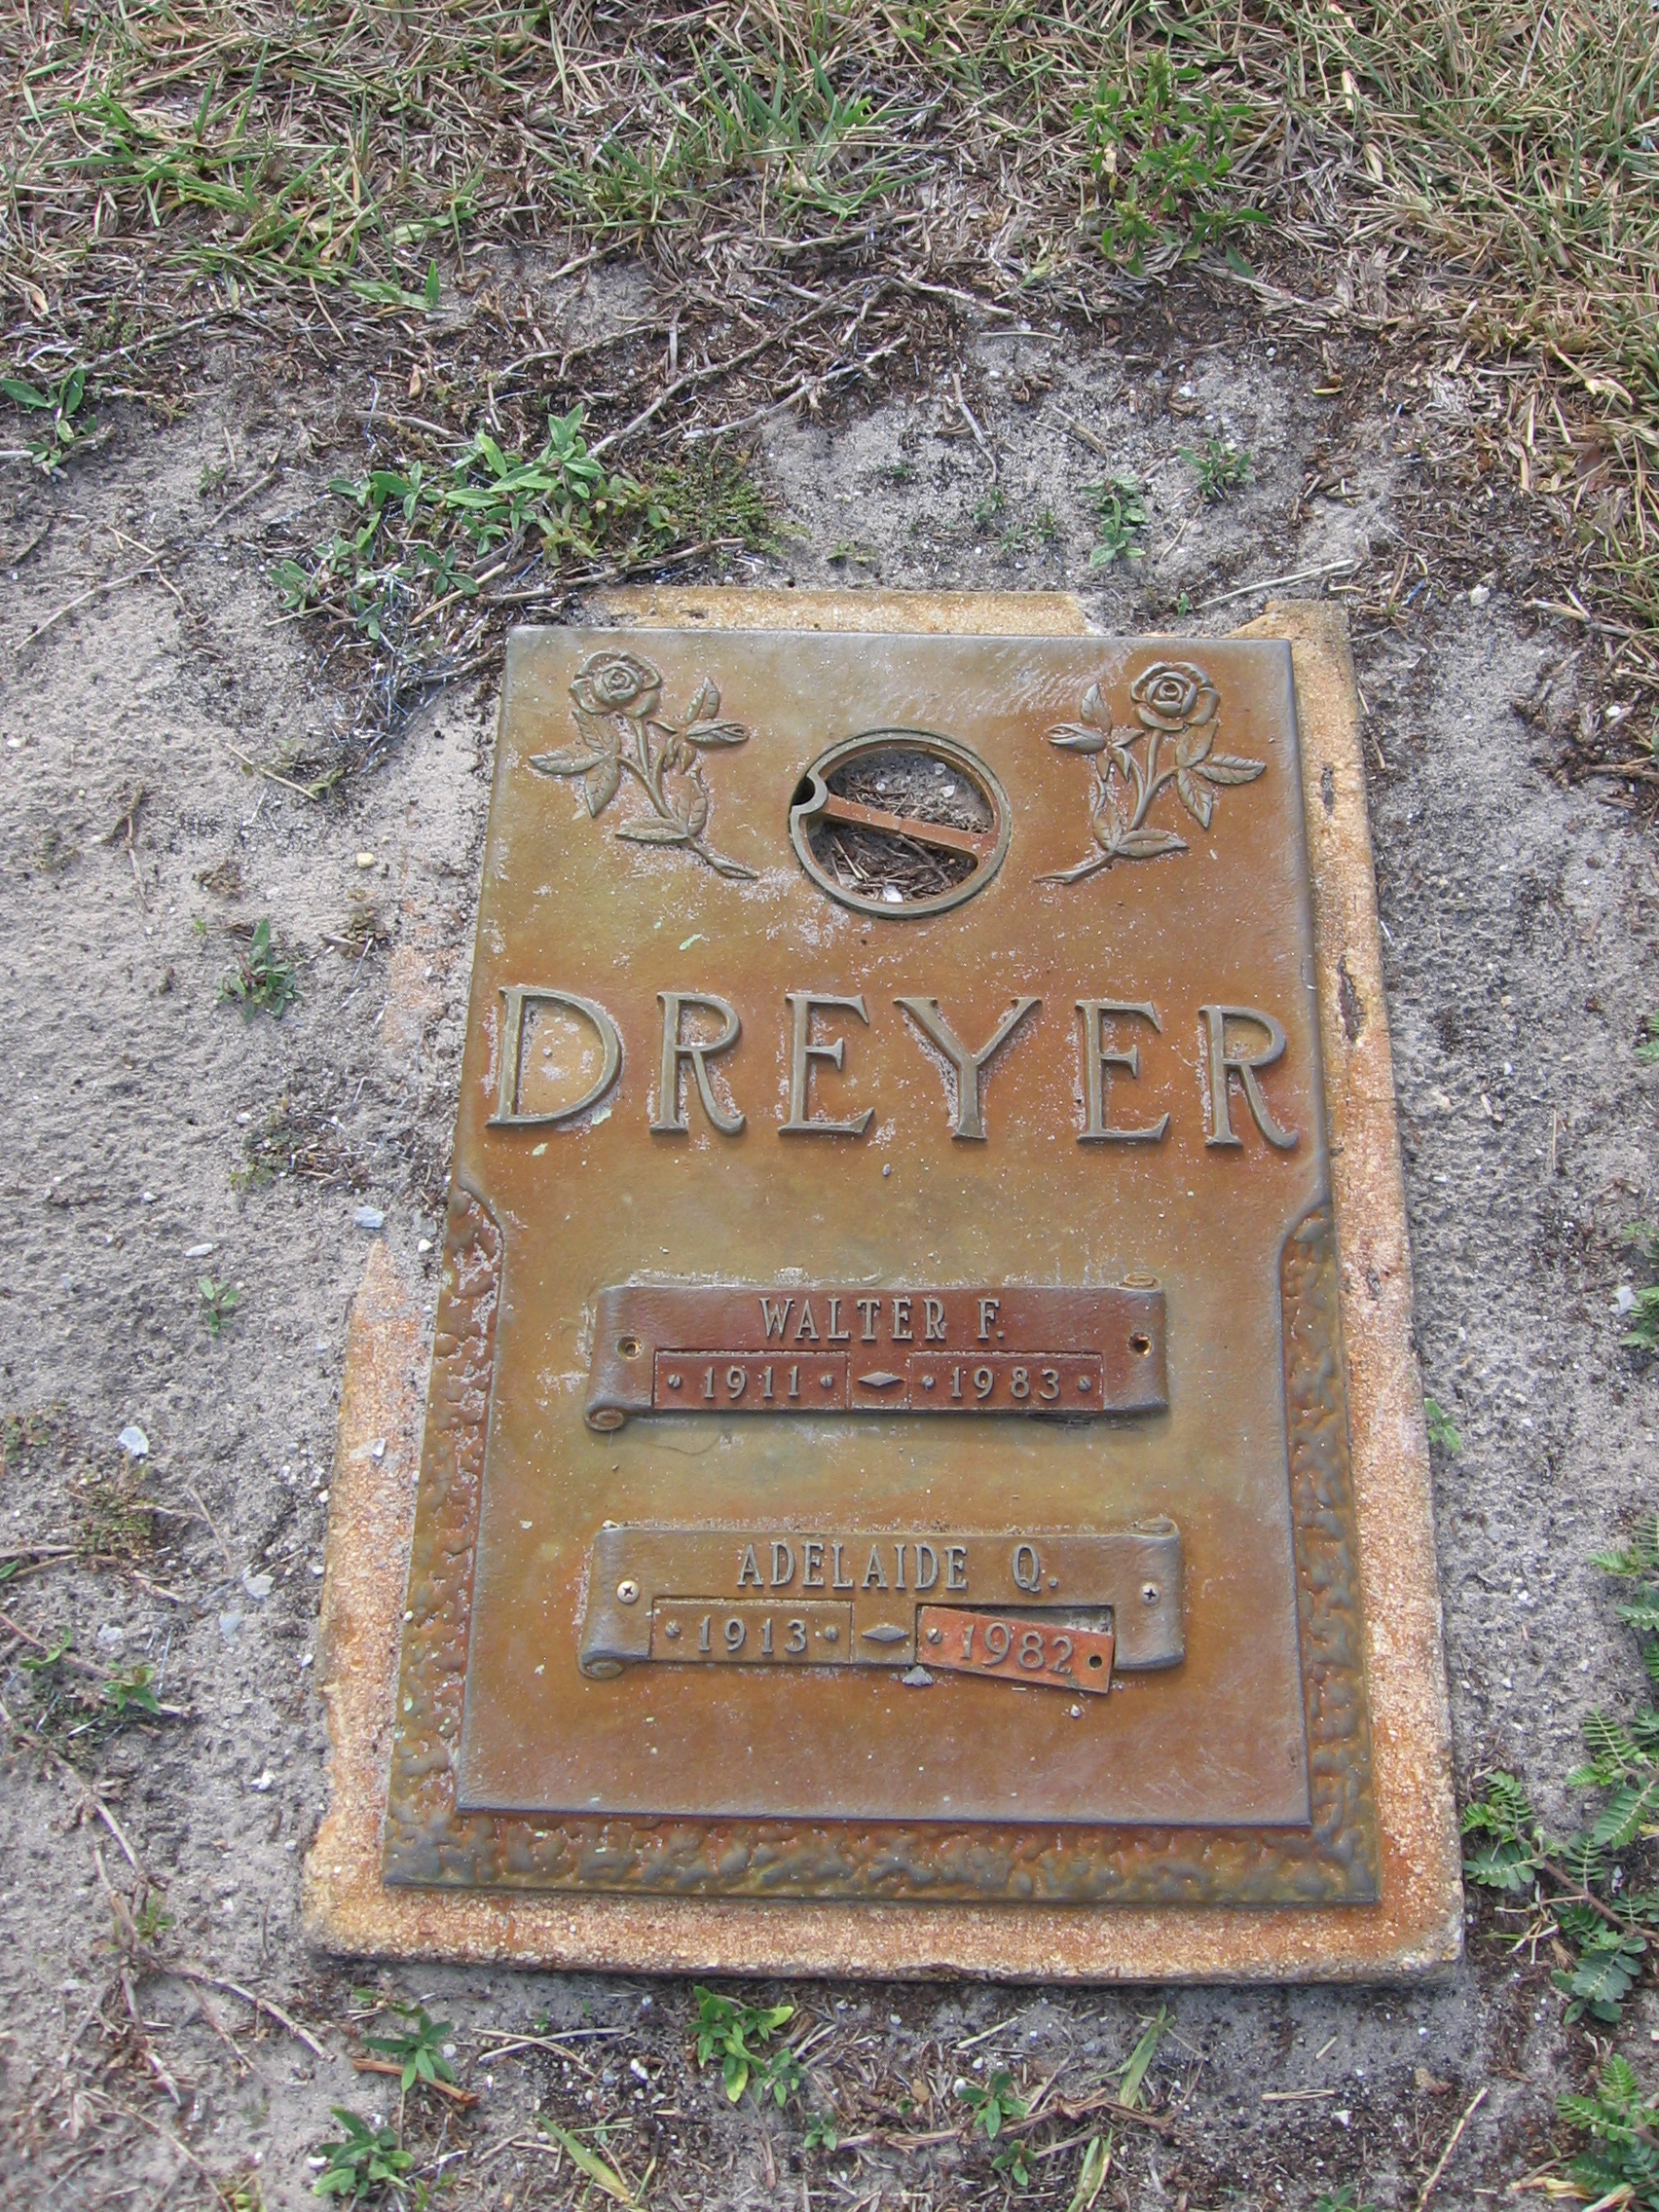 Adelaide Q Dreyer